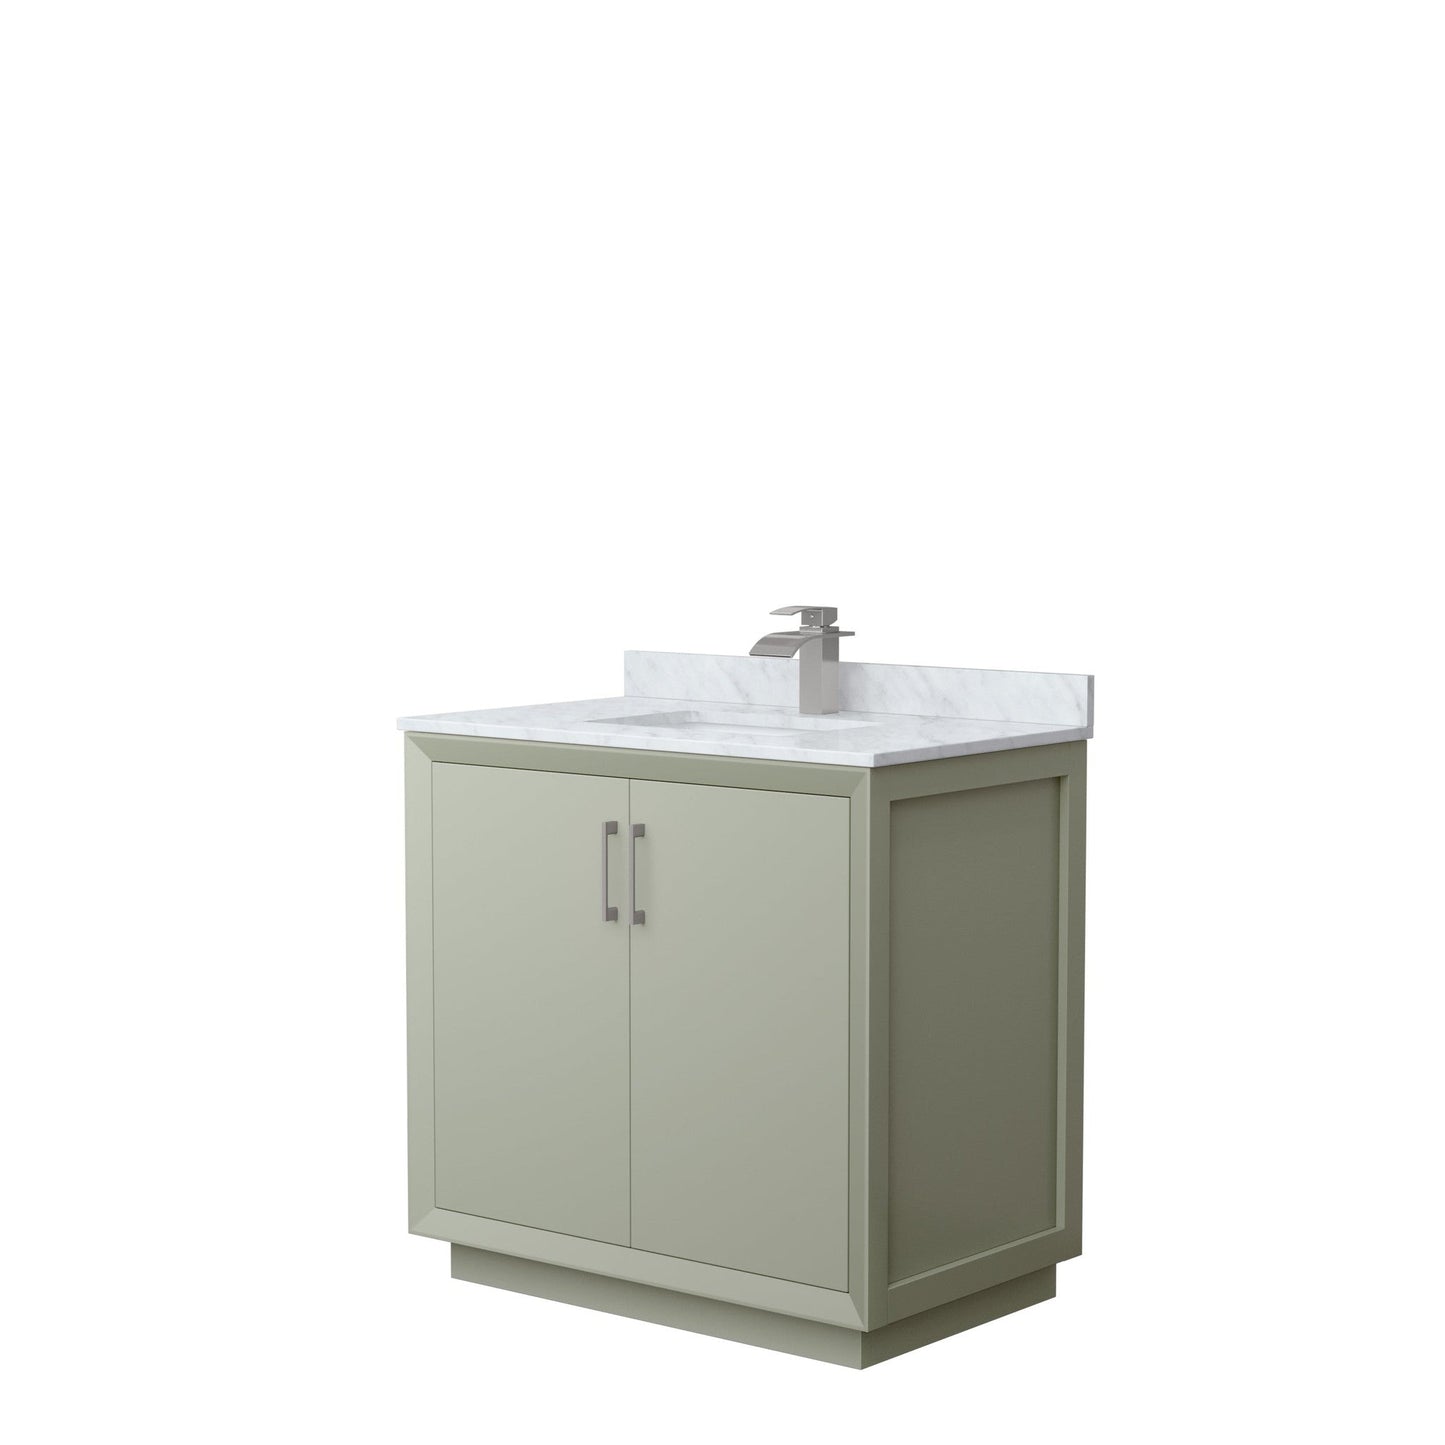 Wyndham Collection Strada 36" Single Bathroom Vanity in Light Green, White Carrara Marble Countertop, Undermount Square Sink, Brushed Nickel Trim